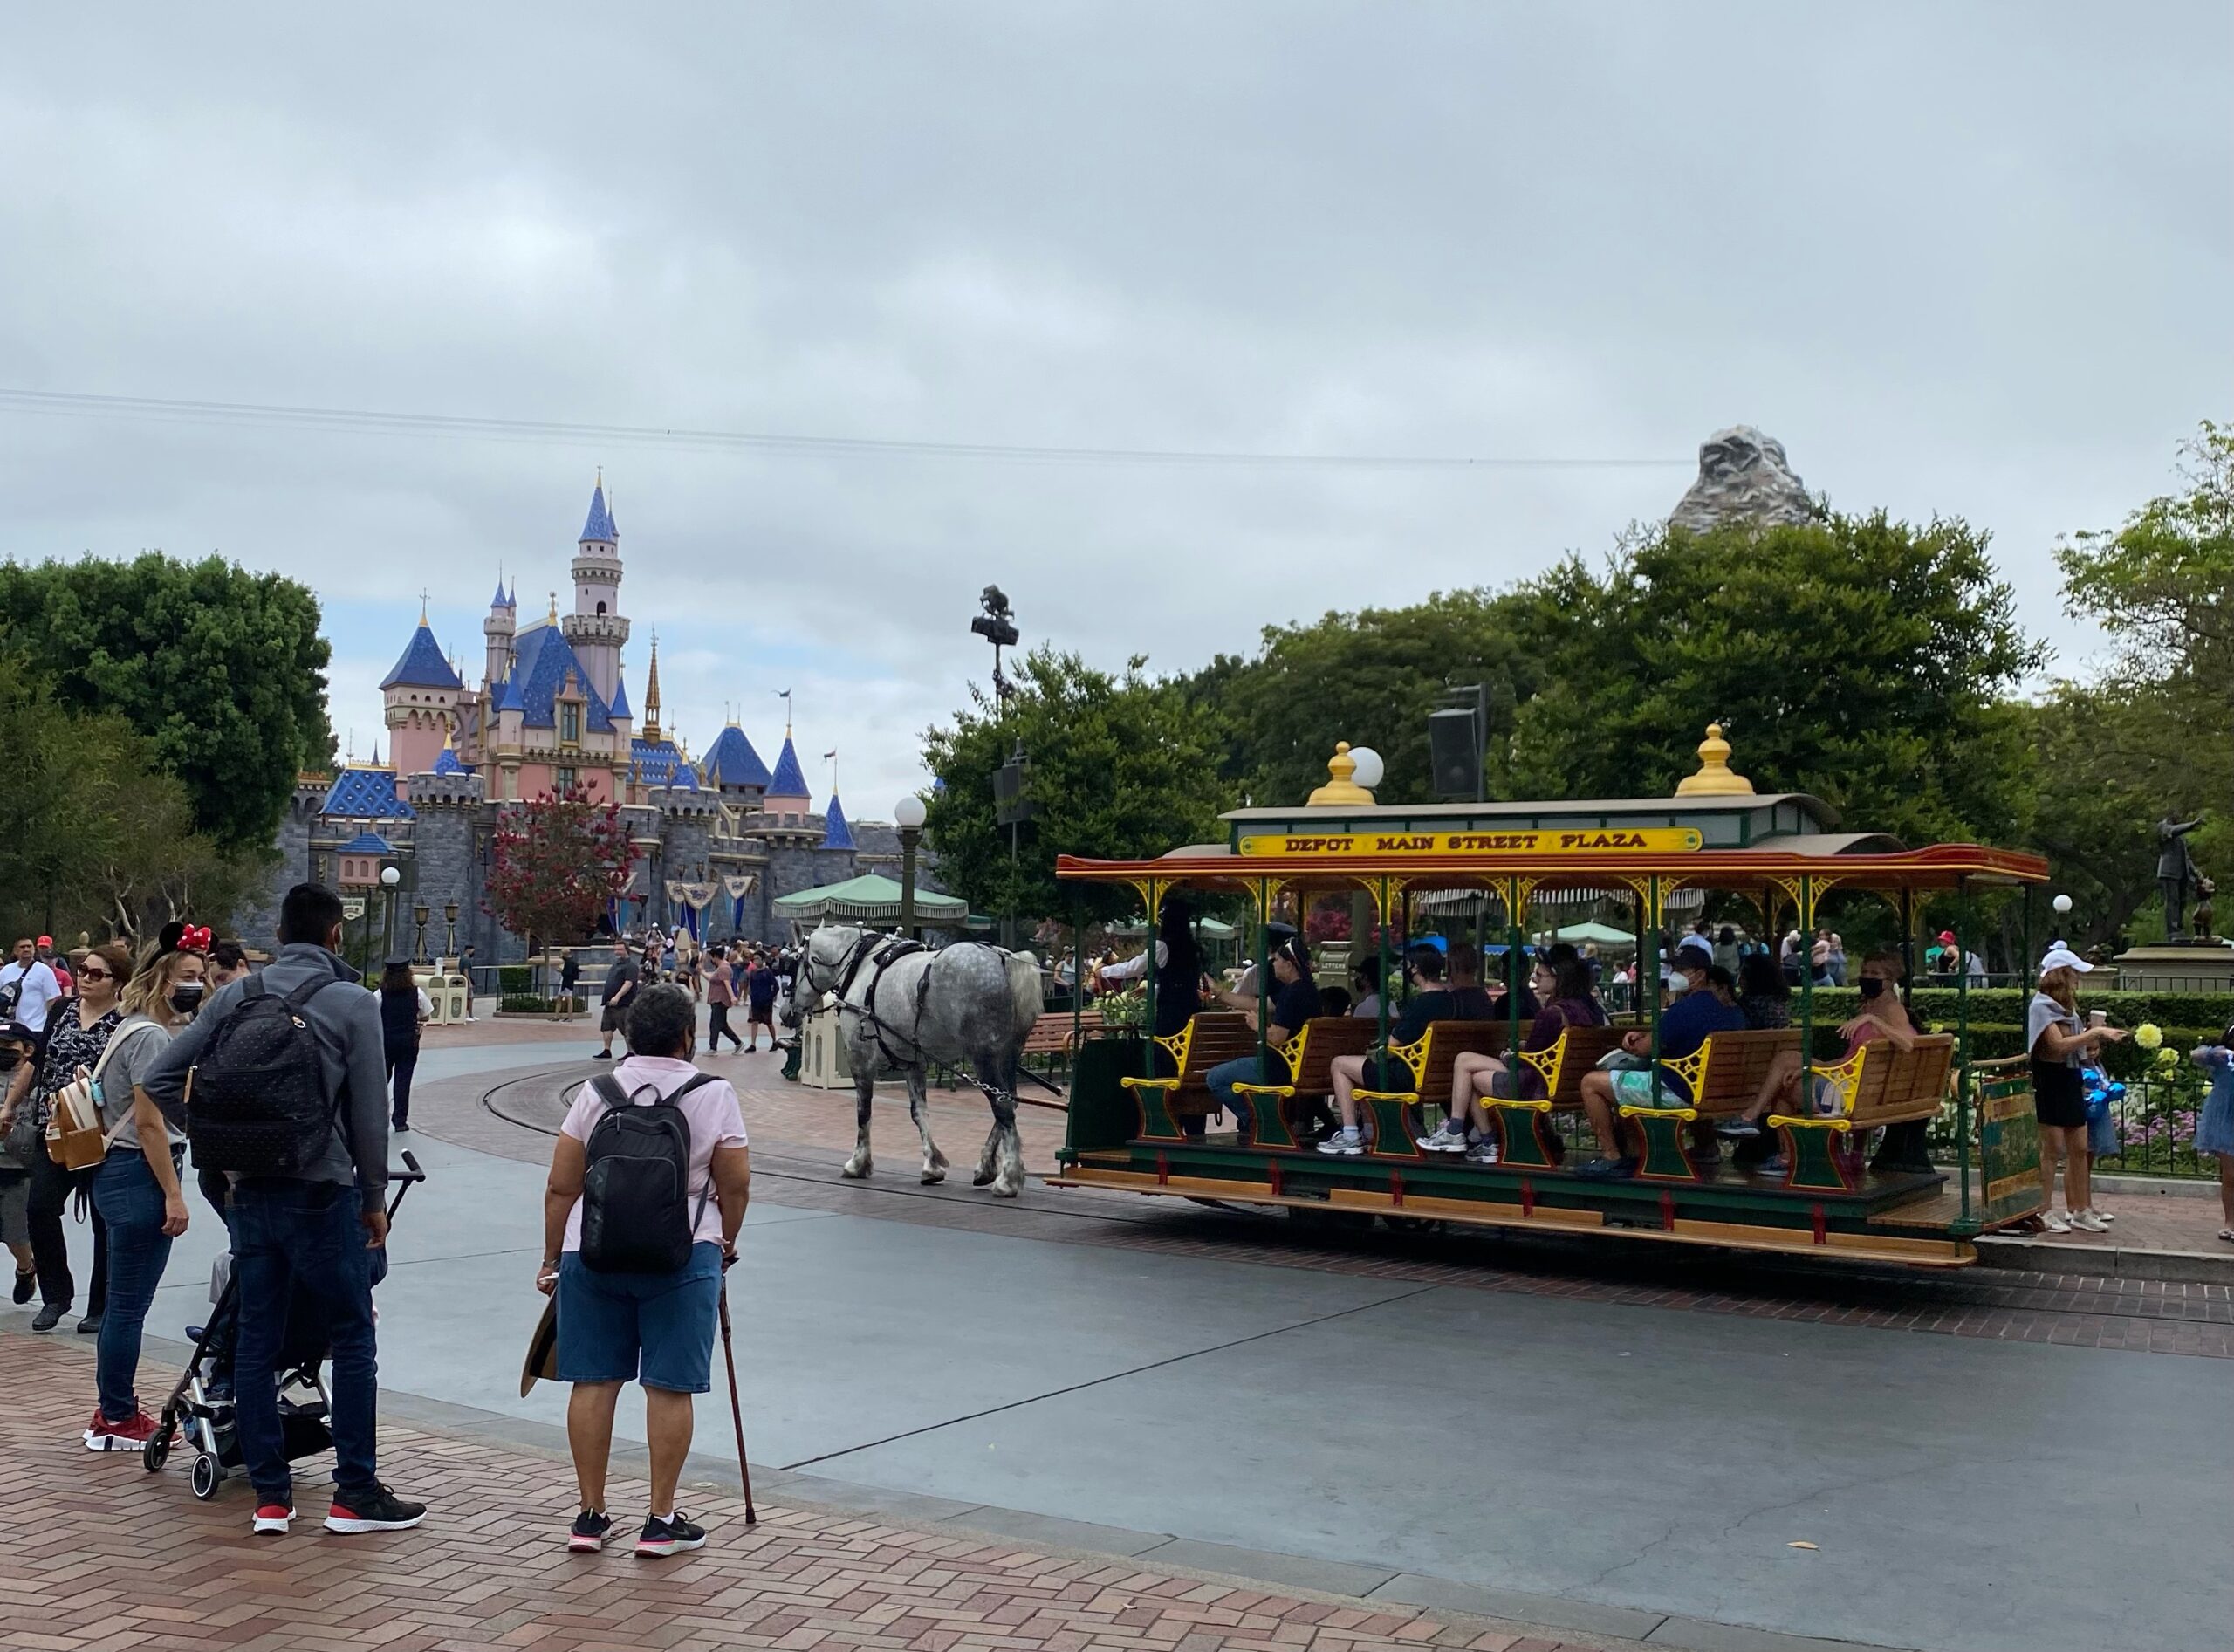 Disneyland Has Lost Its So-Called “Magic”